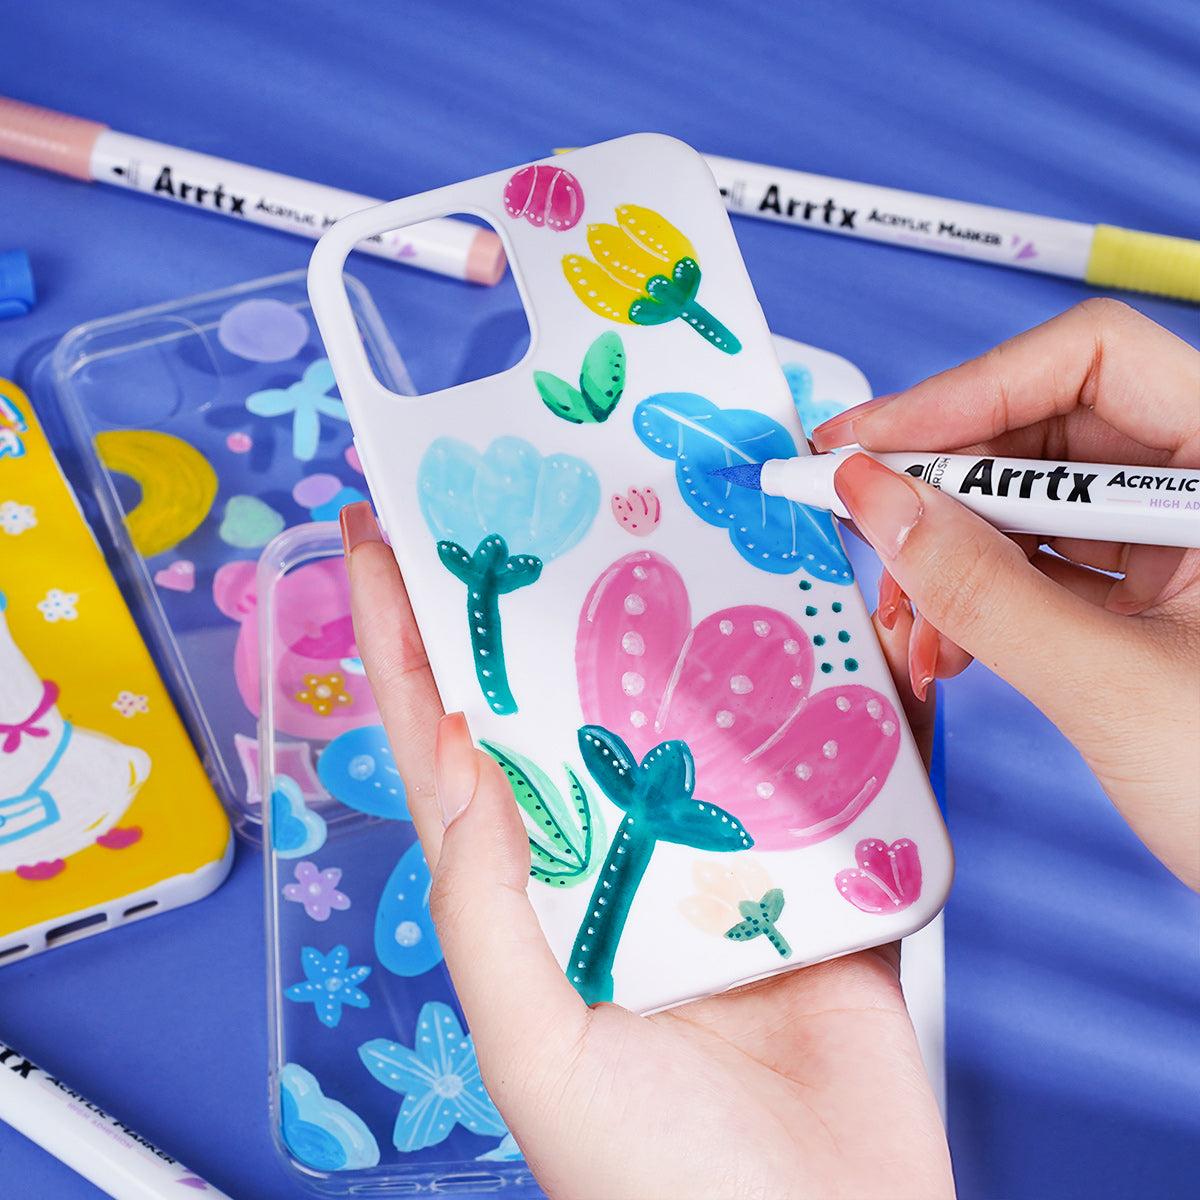 Arrtx 36 Colors Acrylic Marker Extra Brush Tip Paint Pens – ArrtxArt